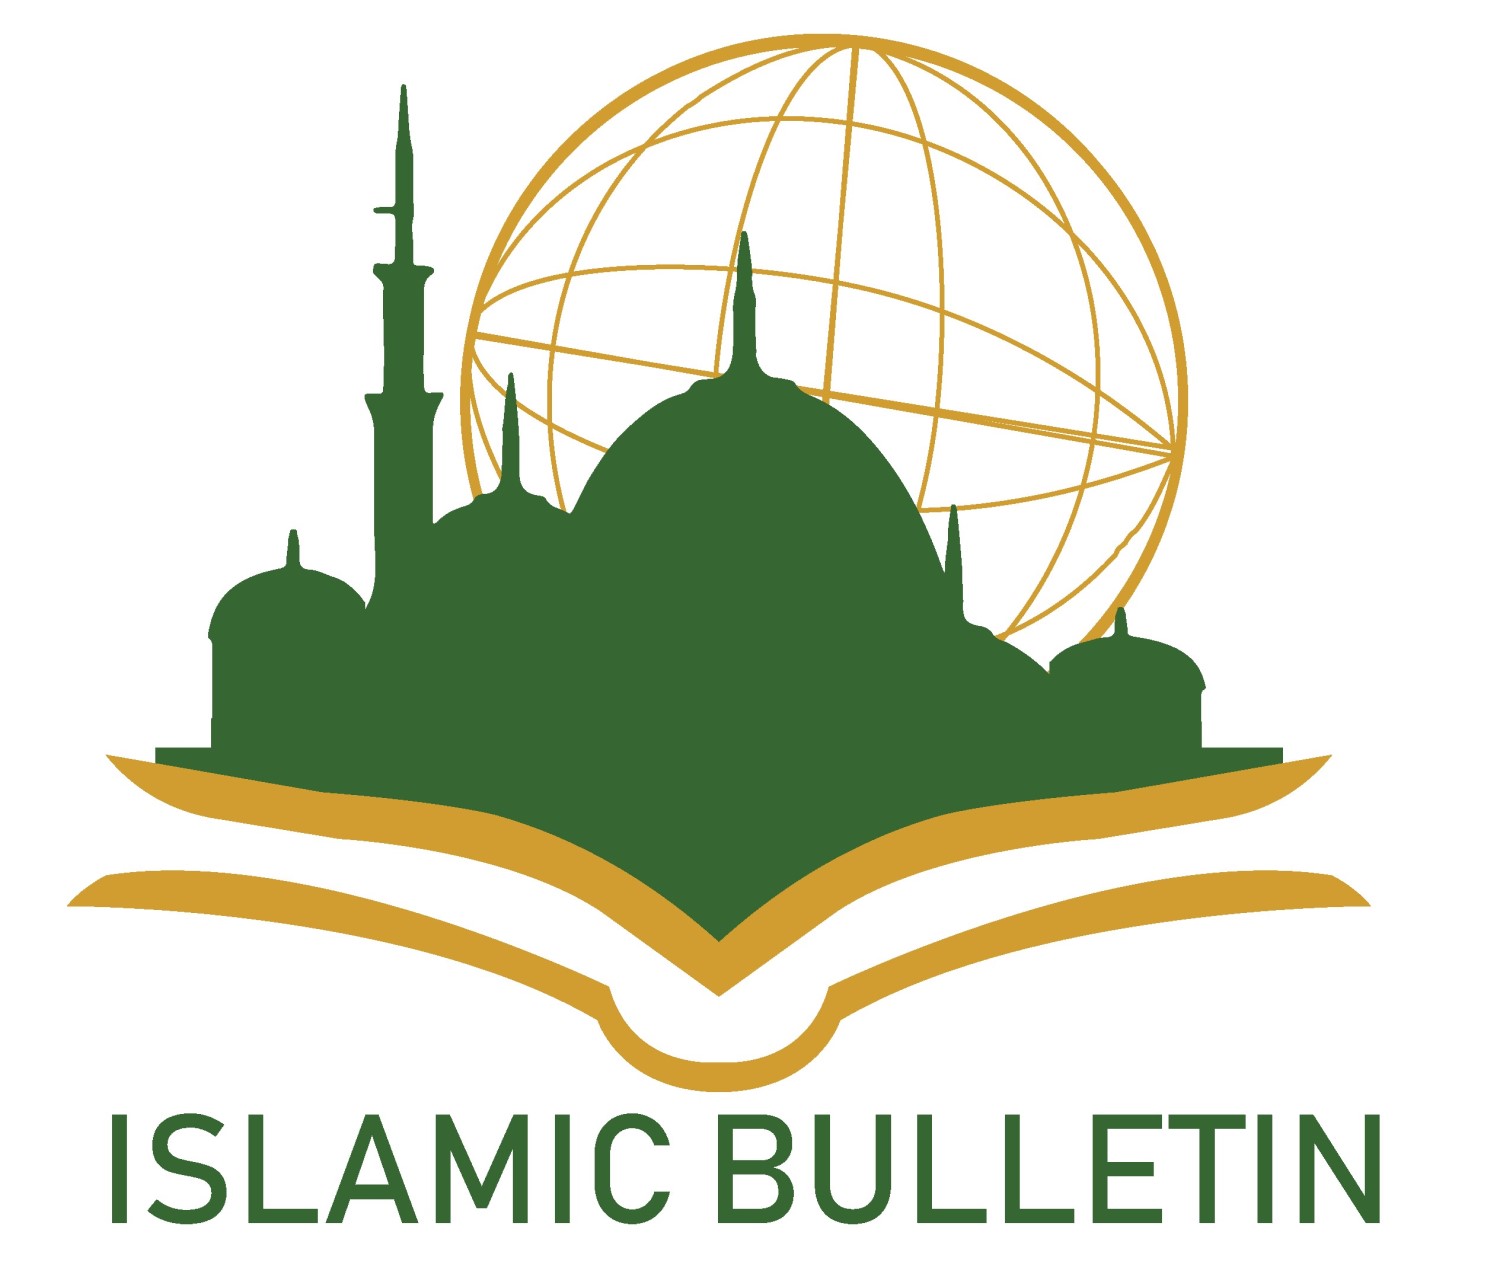 (c) Islamicbulletin.org